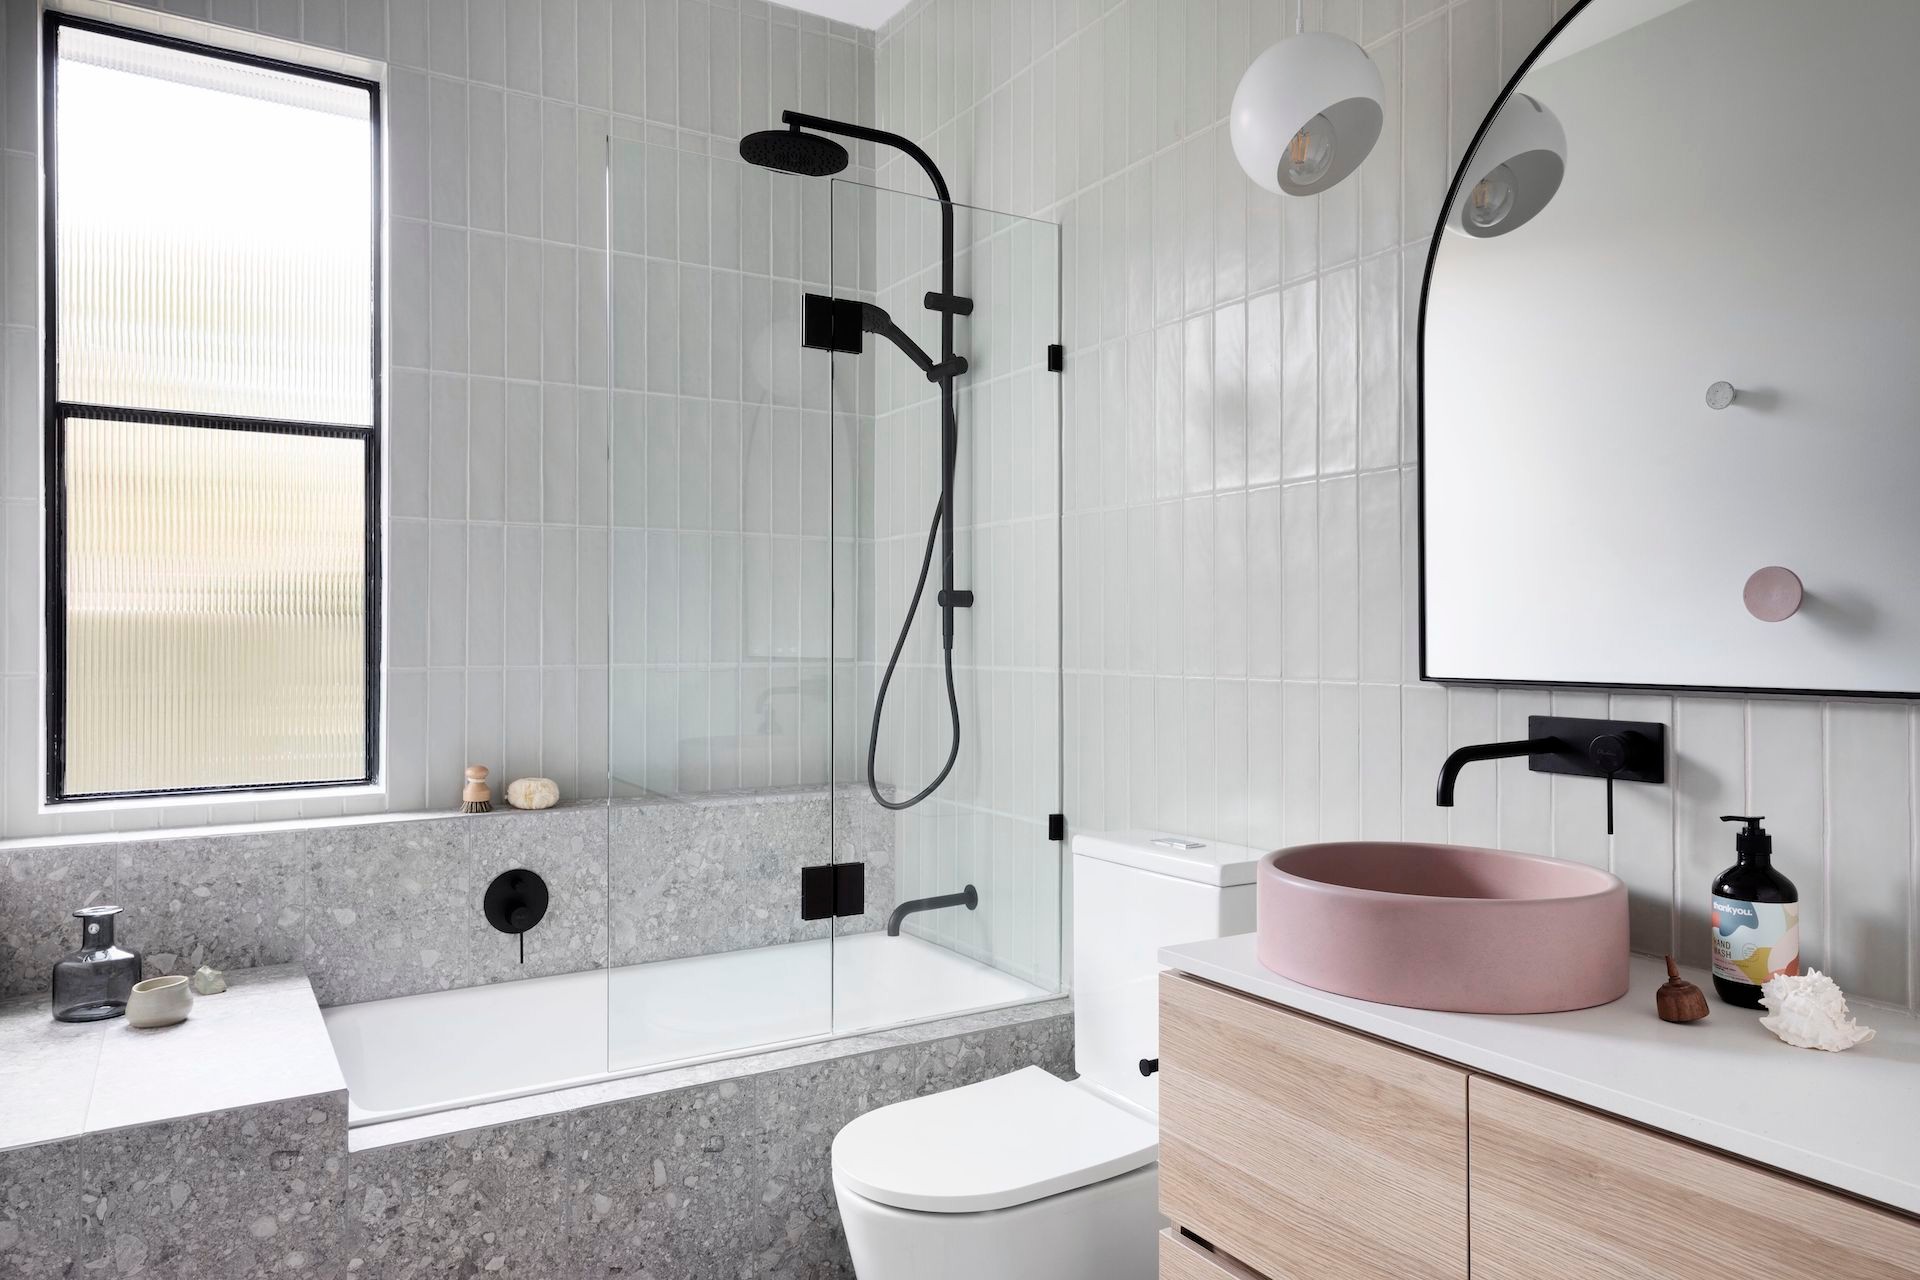 nood co round coloured bathroom basin in chic grey bathroom with black taps